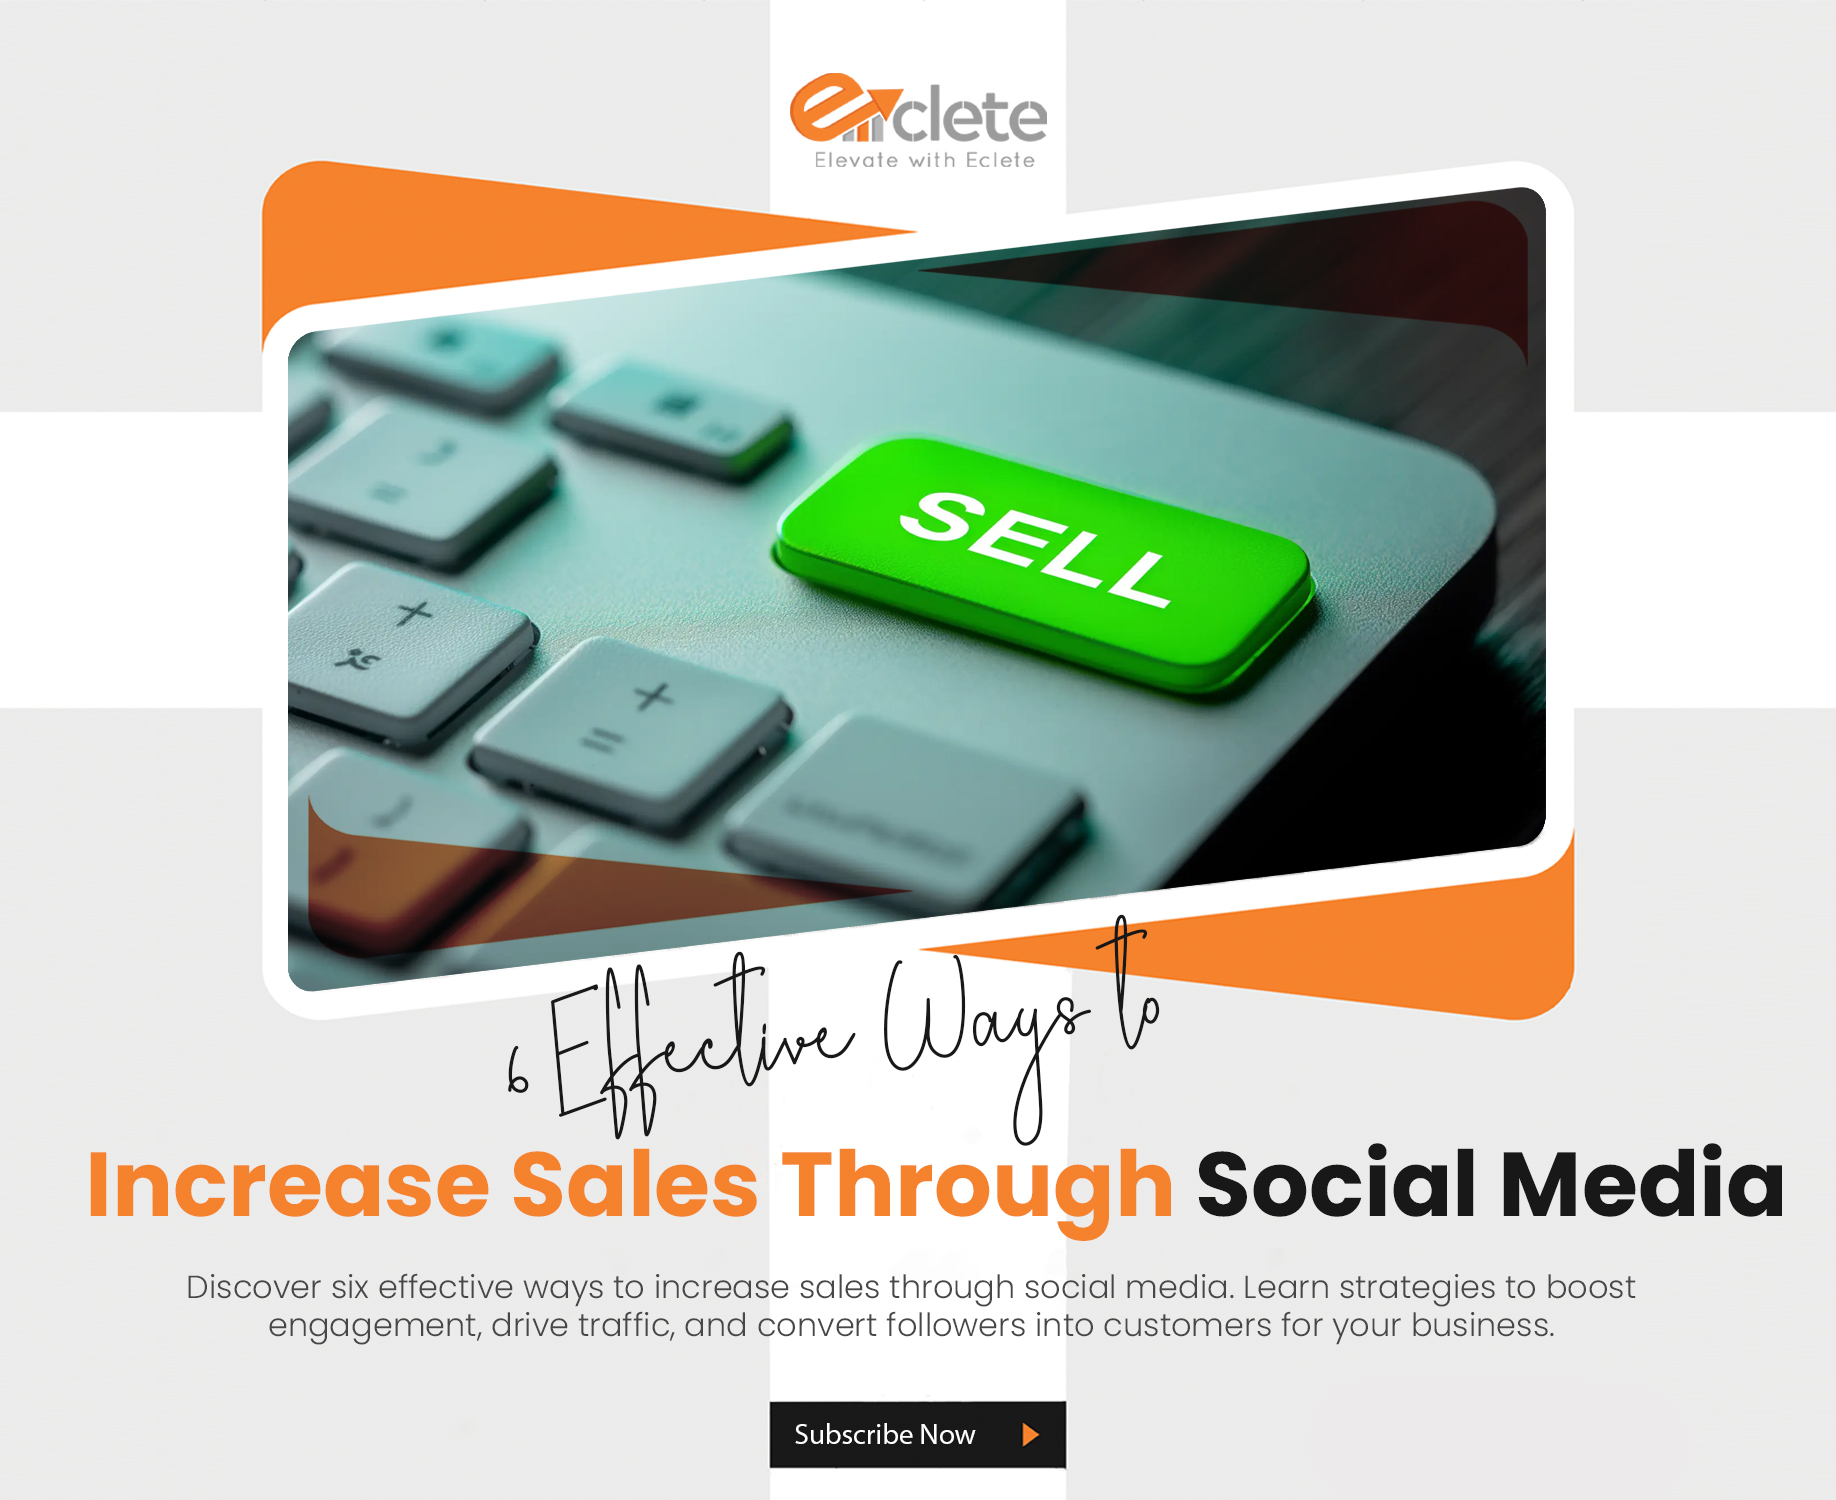 6 Effective Ways to Increase Sales Through Social Media